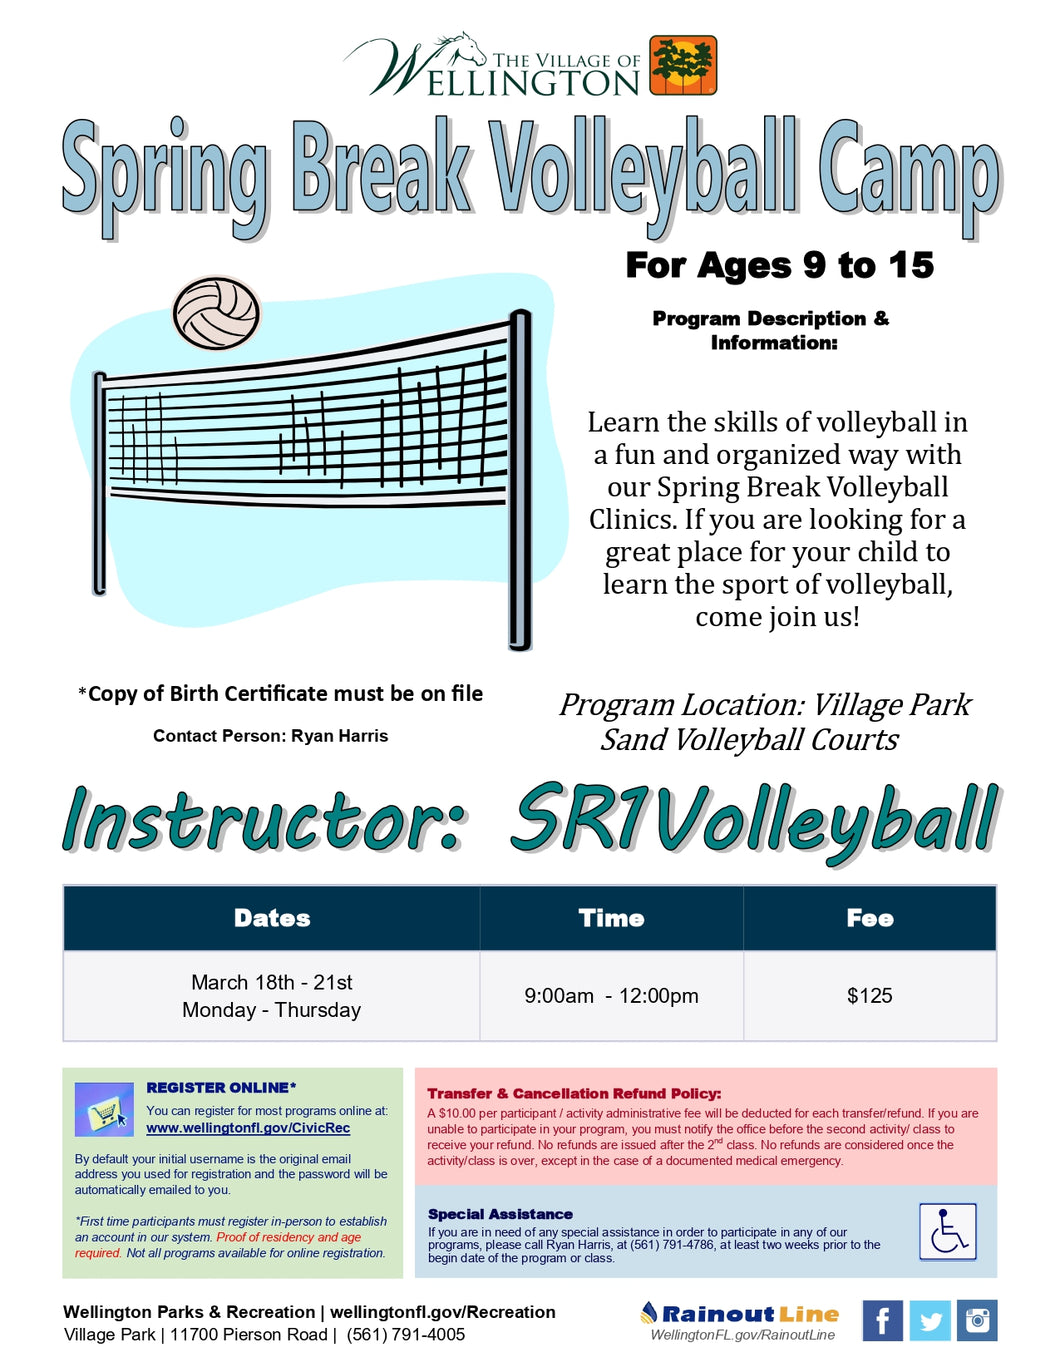 Spring Break Camp - SR1 Volleyball